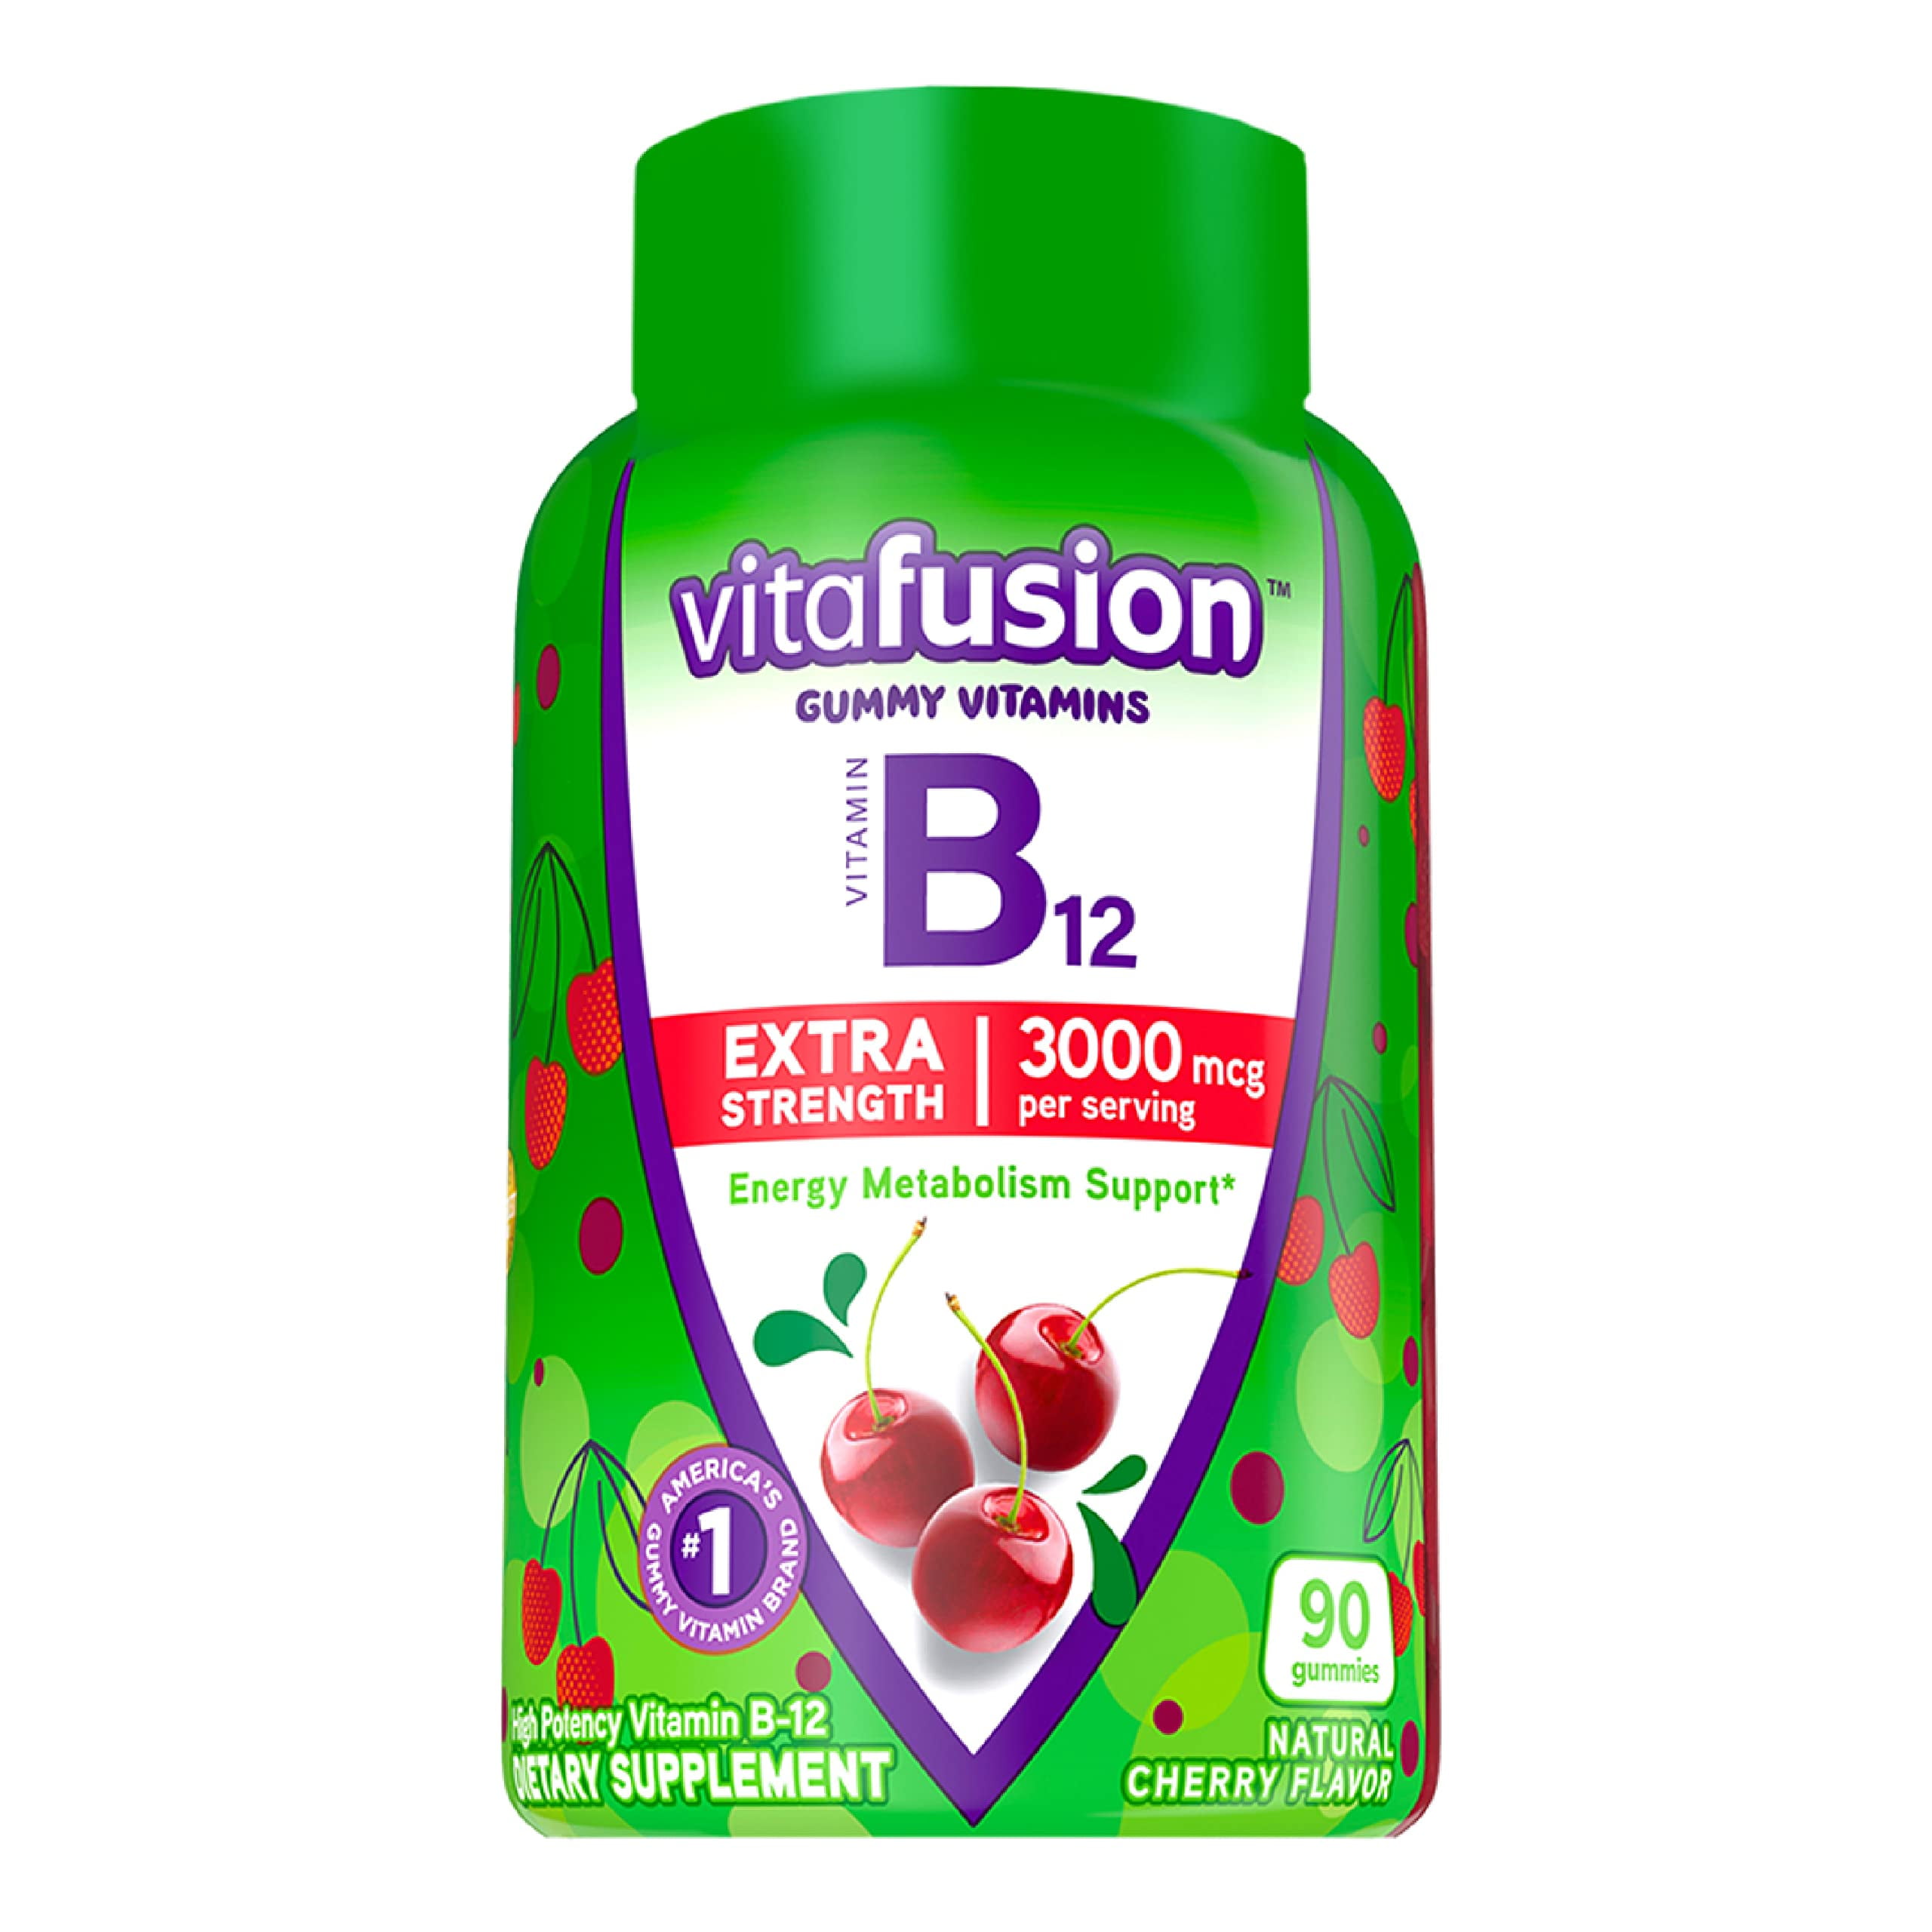 vitafusion Womens Multivitamin Gummies, Daily Vitamins for Women